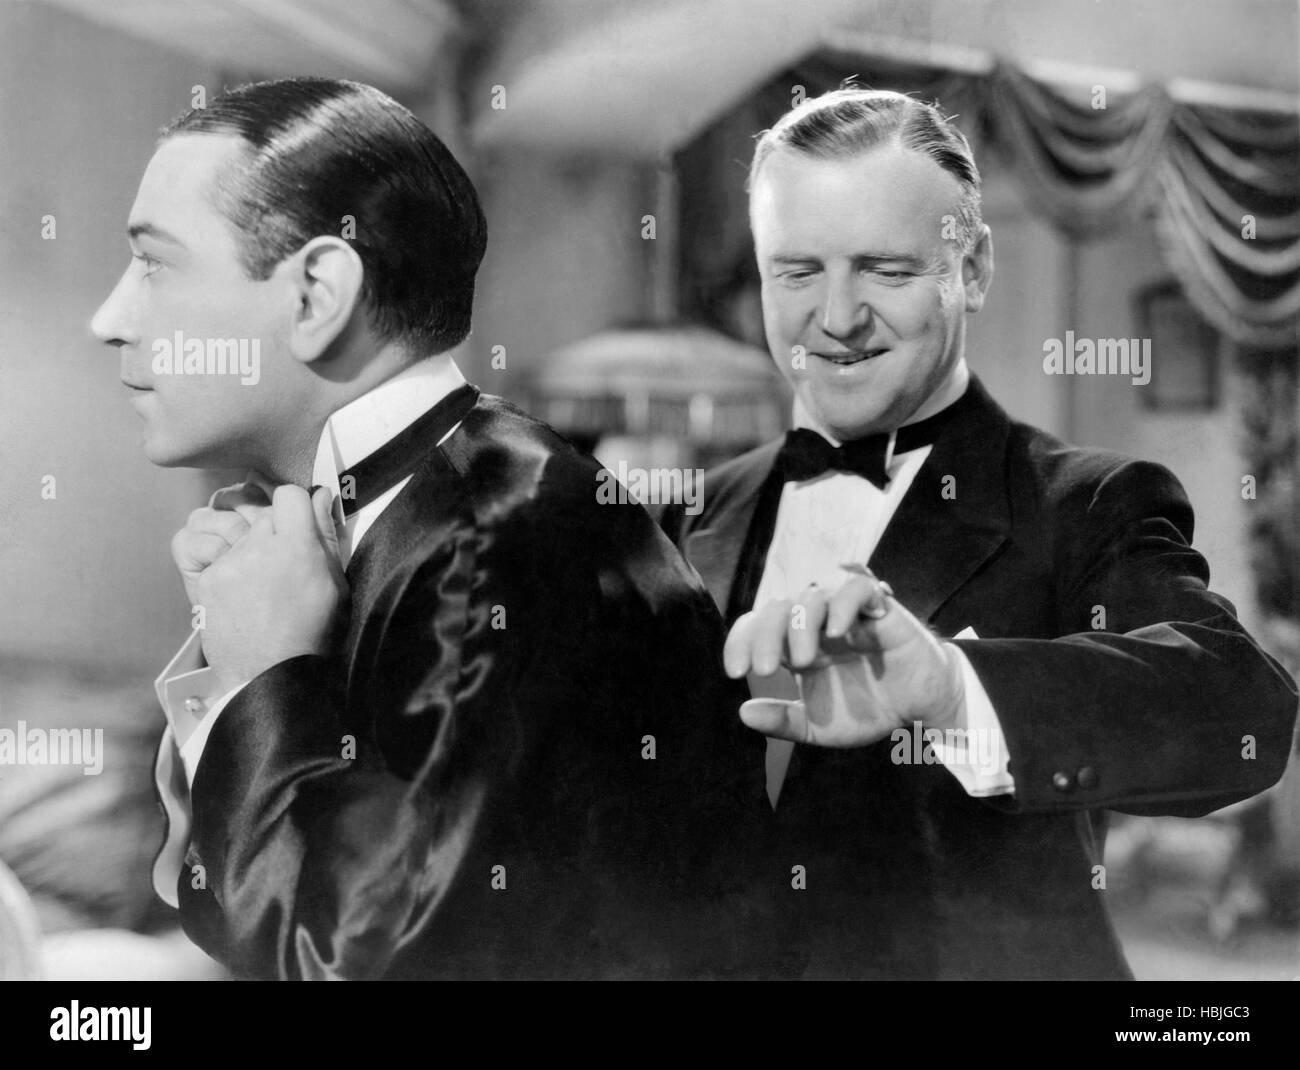 BOLERO, George Raft, William Frawley, 1934 Stock Photo - Alamy